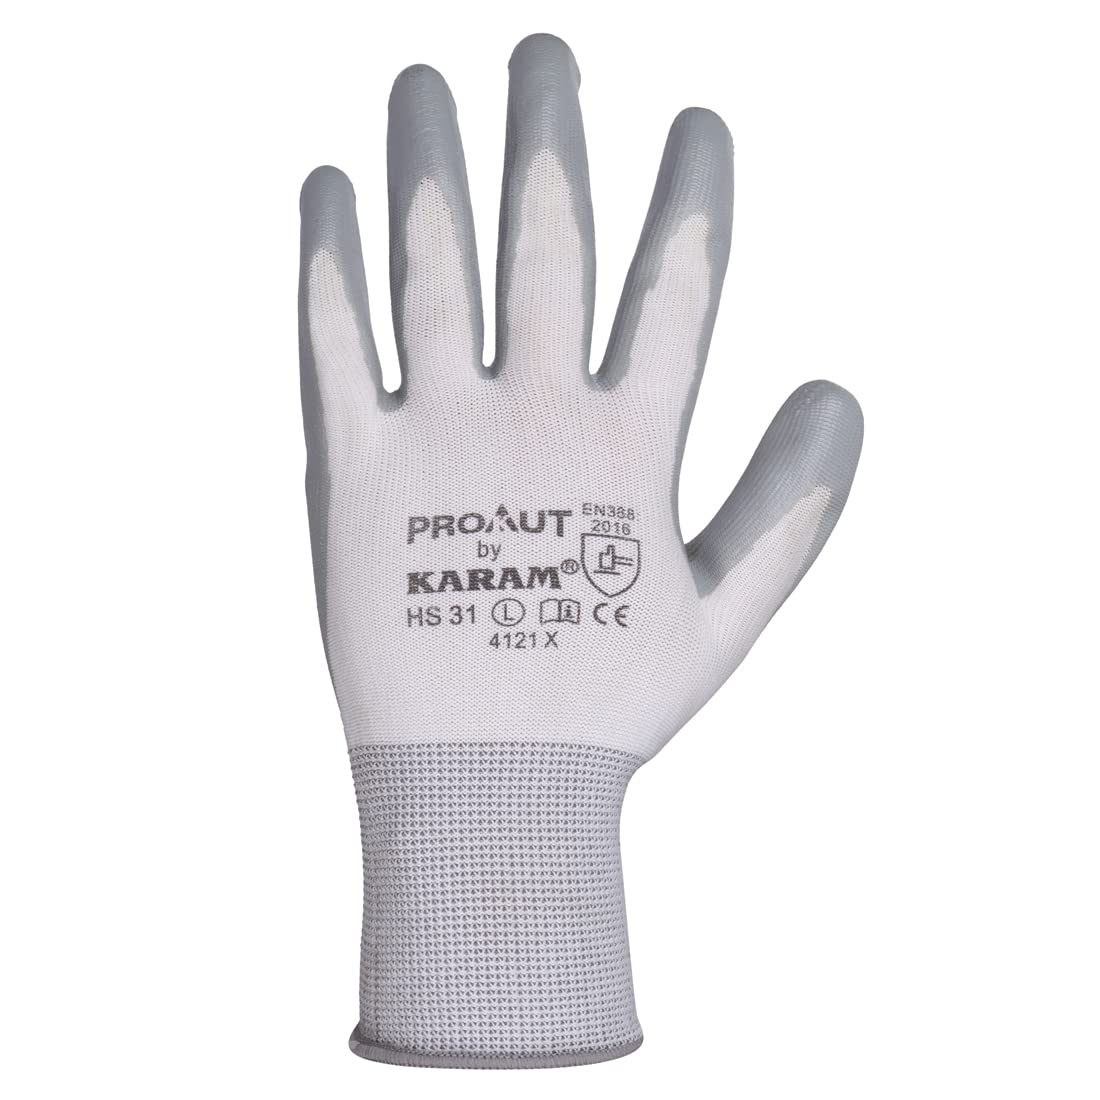 /storage/photos/1/karam new product/Karam Safety gloves HS 31 1.png